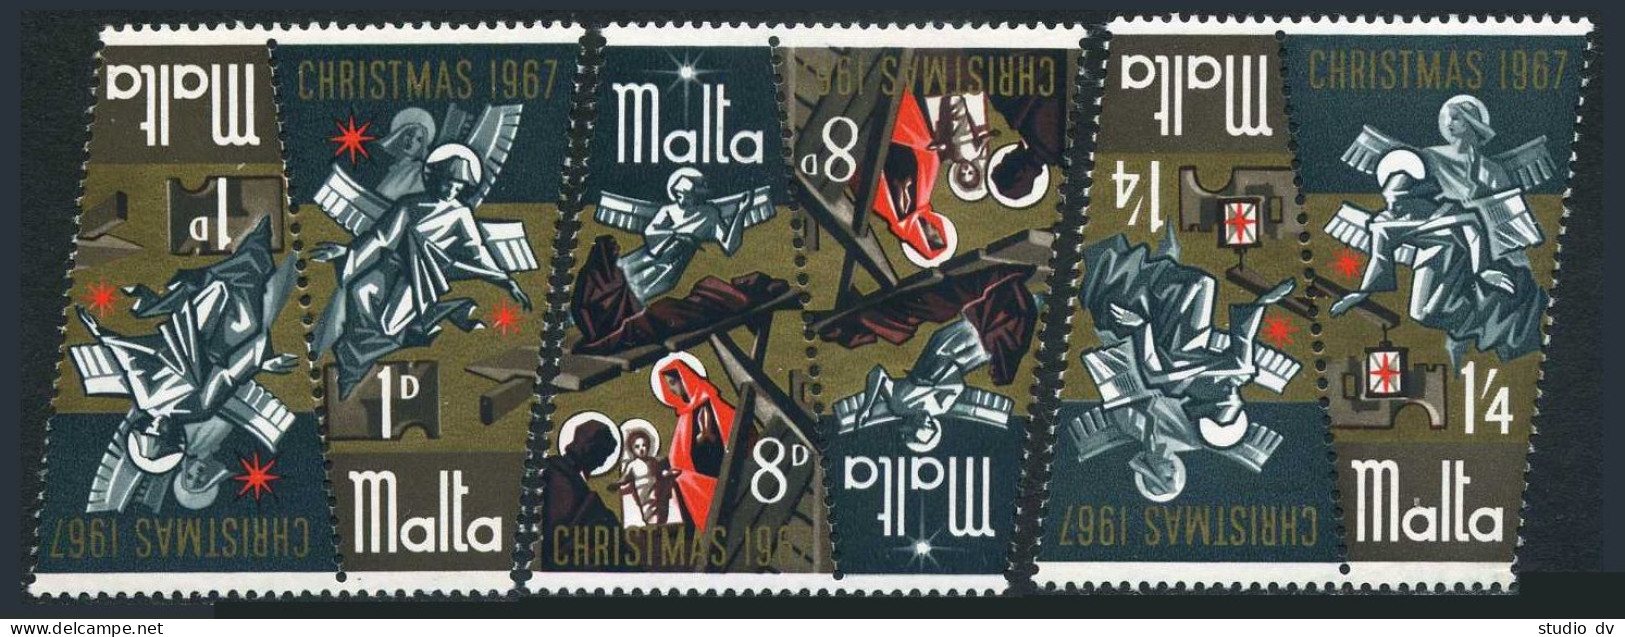 Malta 375-377 Tete-beche, MNH. Michel 364-366. Christmas 1967, Nativity. - Malte